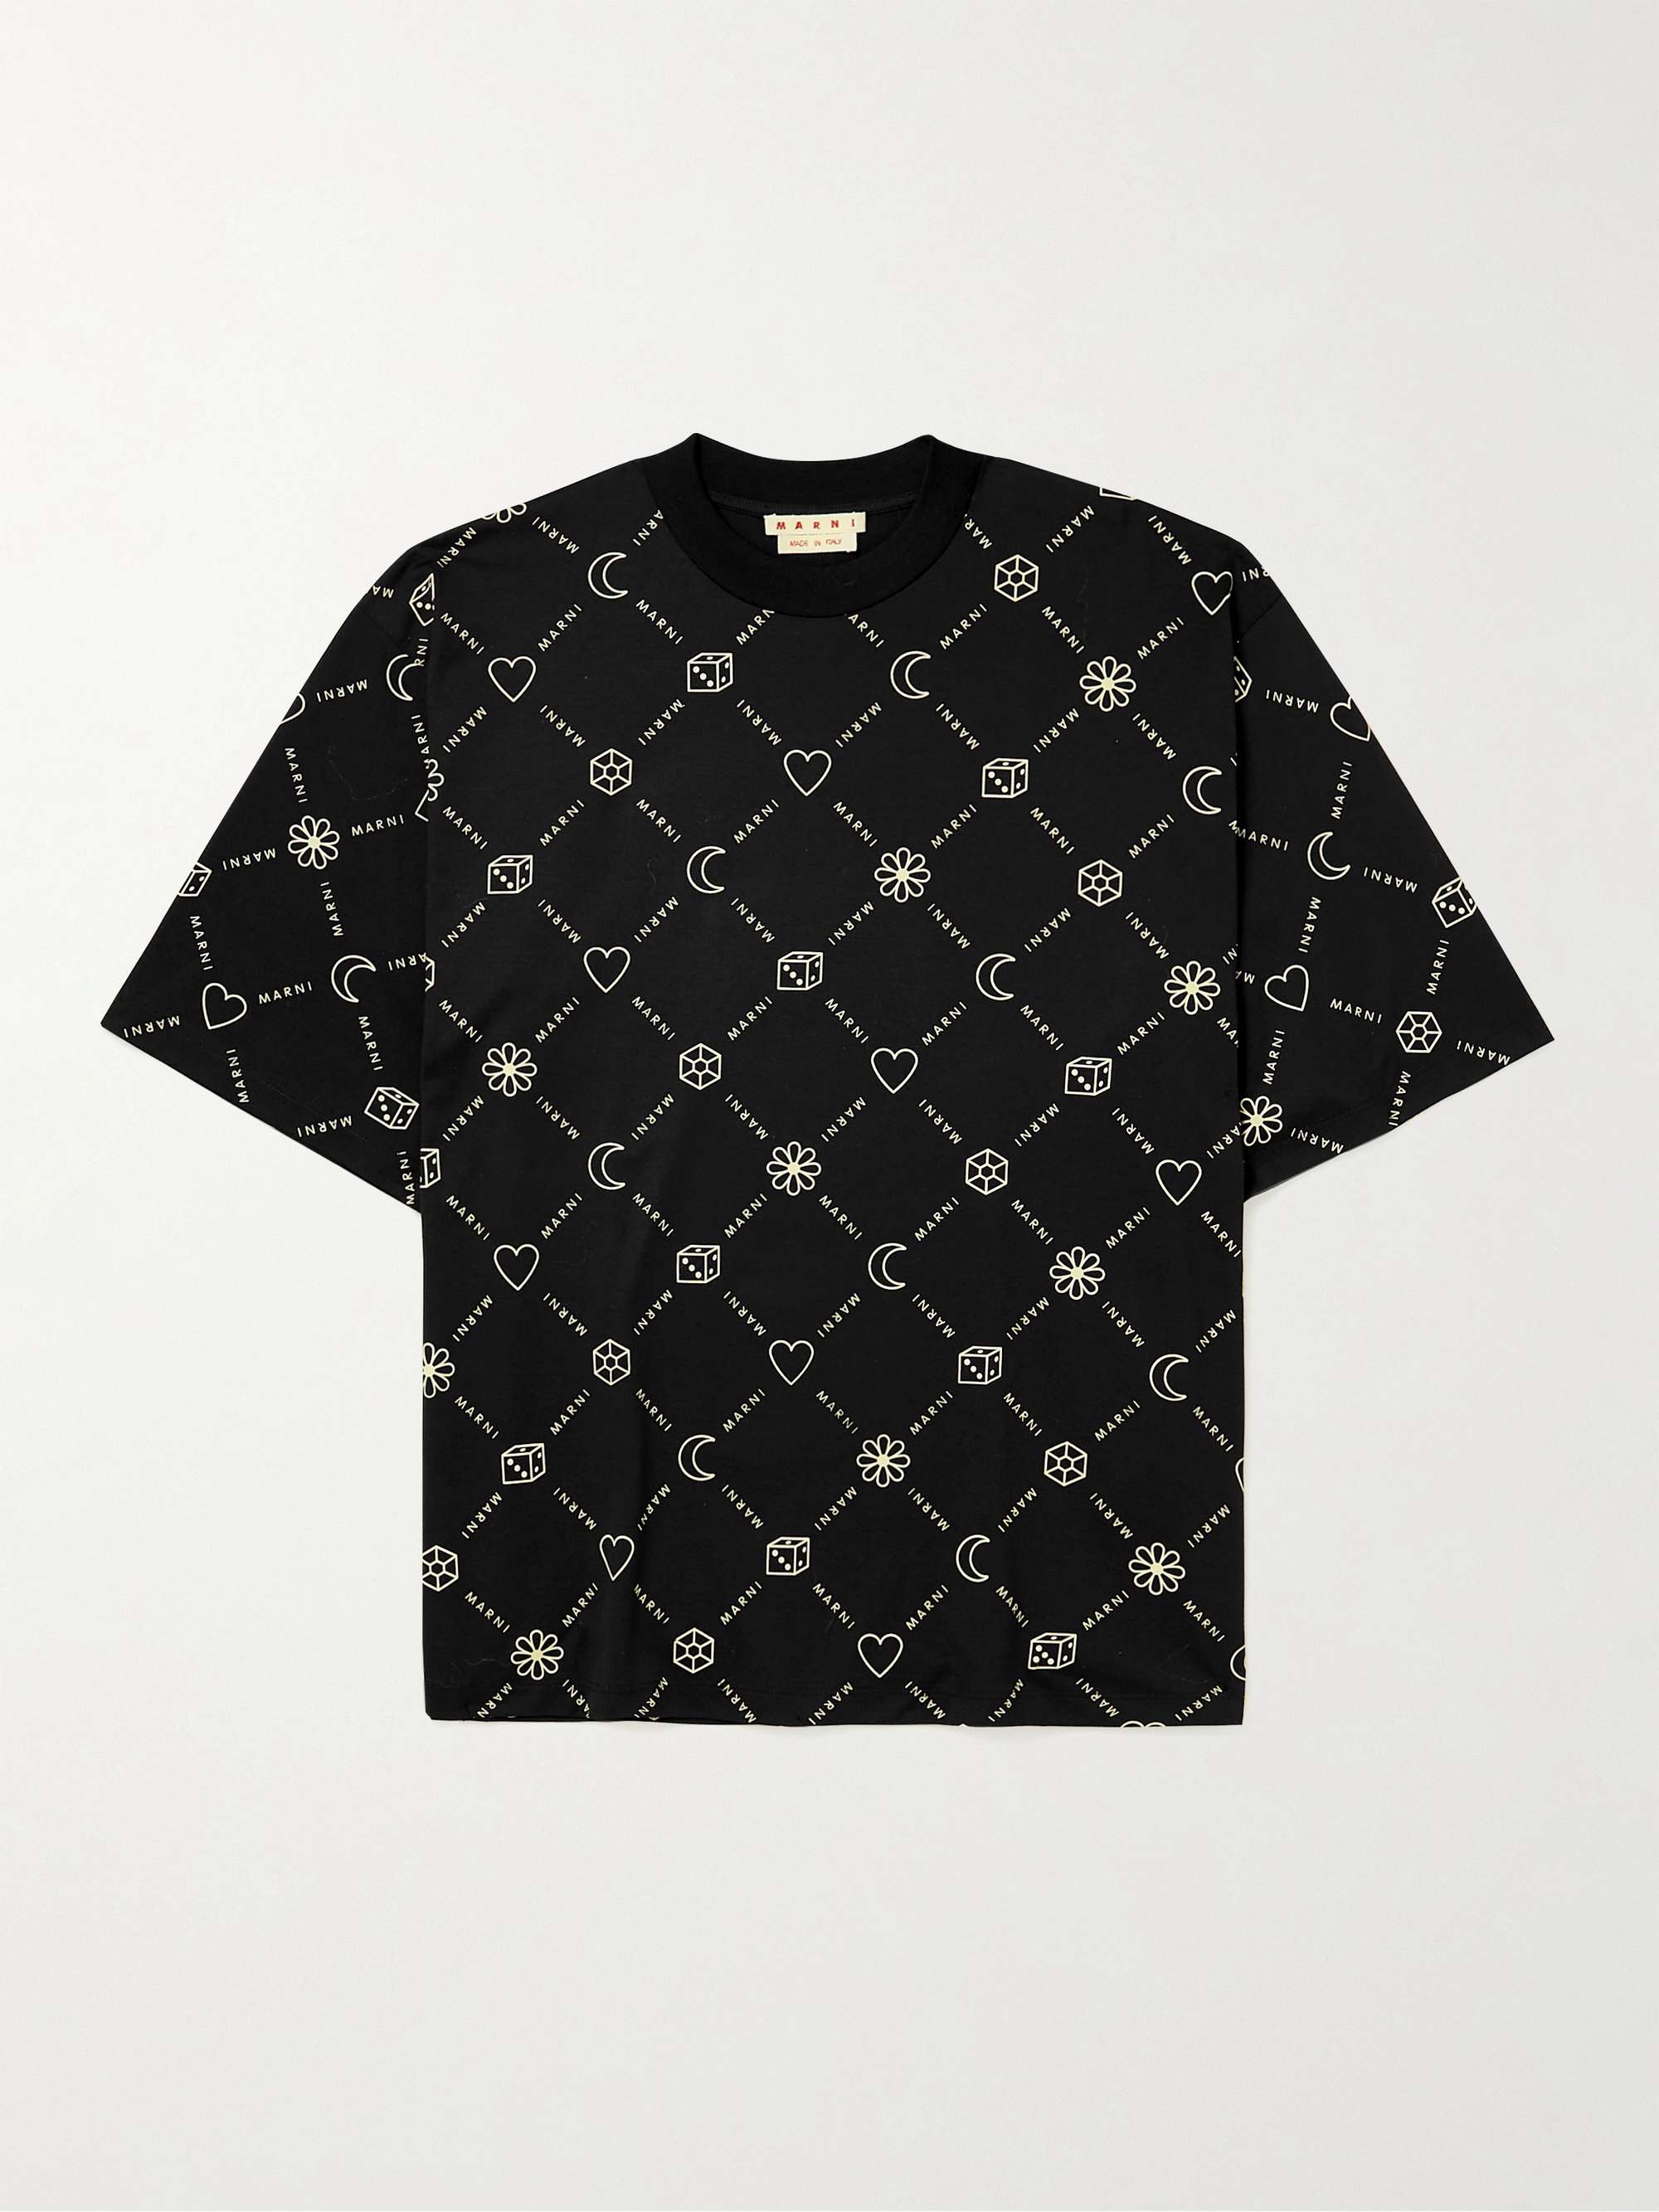 MARNI Logo-Print Cotton-Jersey T-Shirt